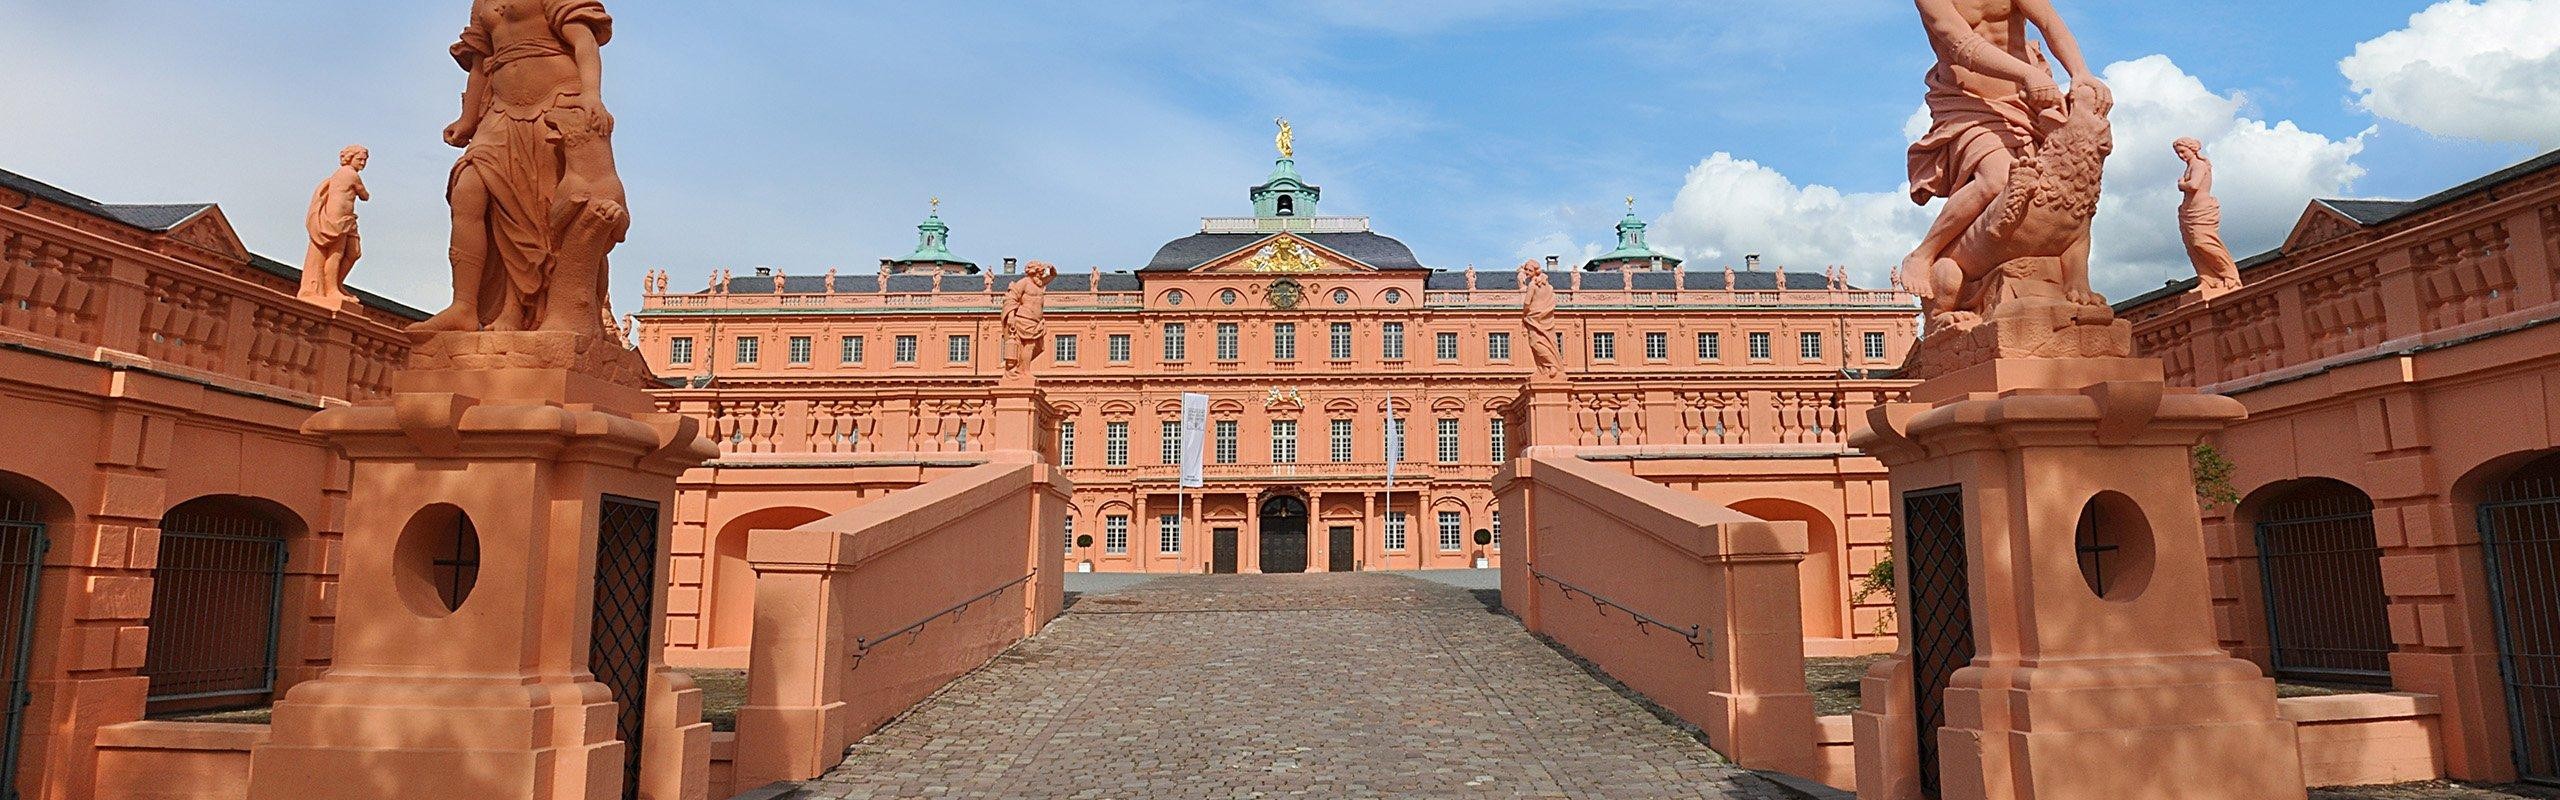 Imposante Einfahrt zum Ehrenhof der Barockresidenz Rastatt